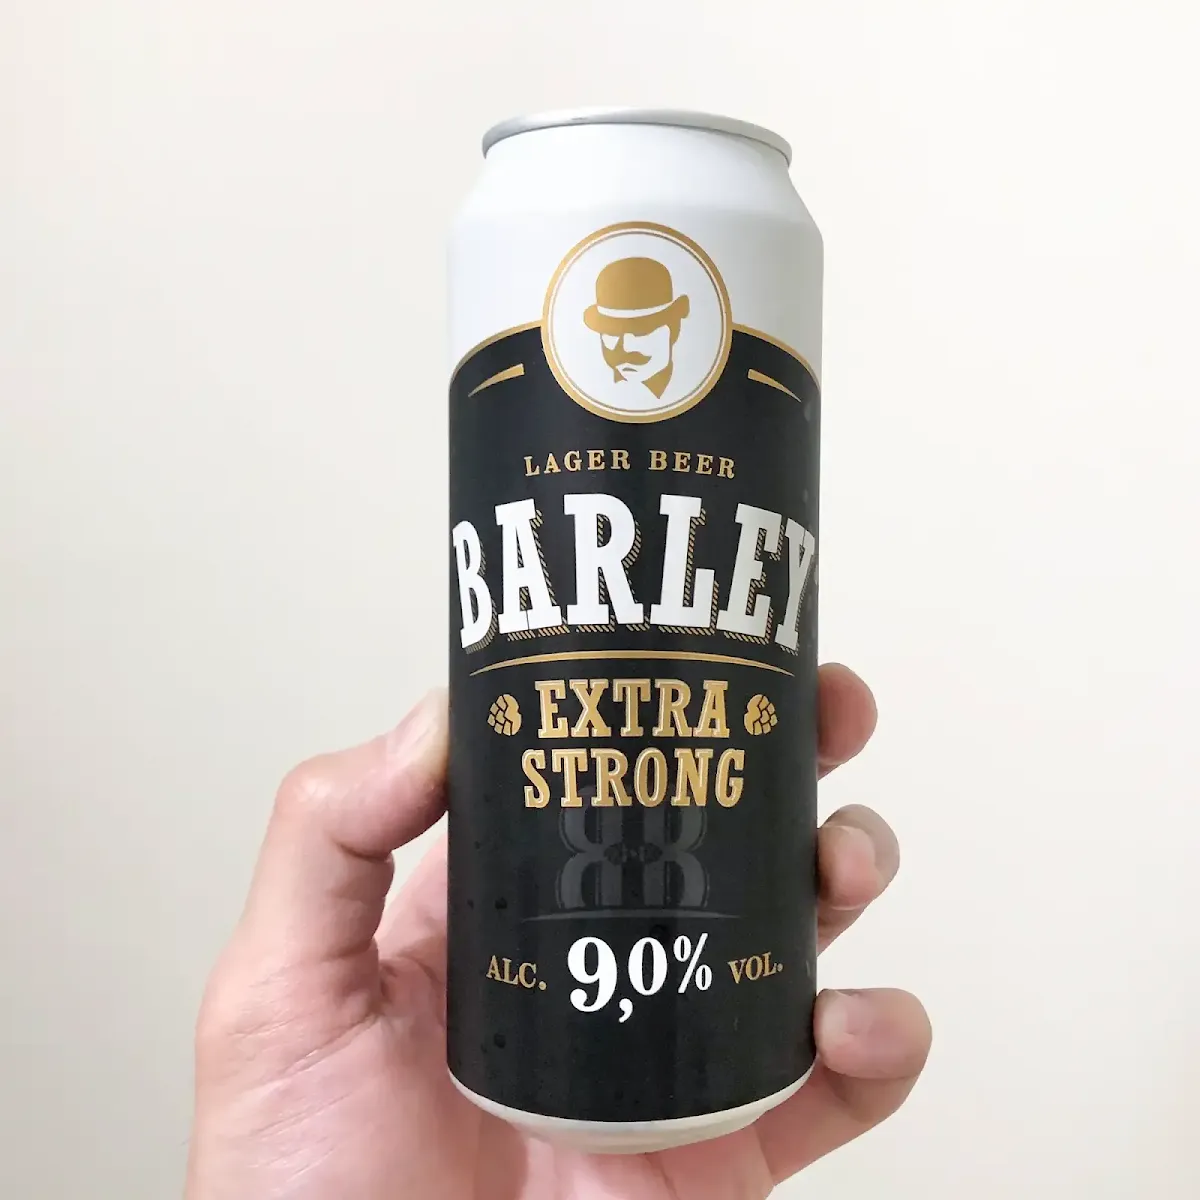 皇家雙 B 9% 金牌啤酒 (Barley Super Mocne Extra Strong)